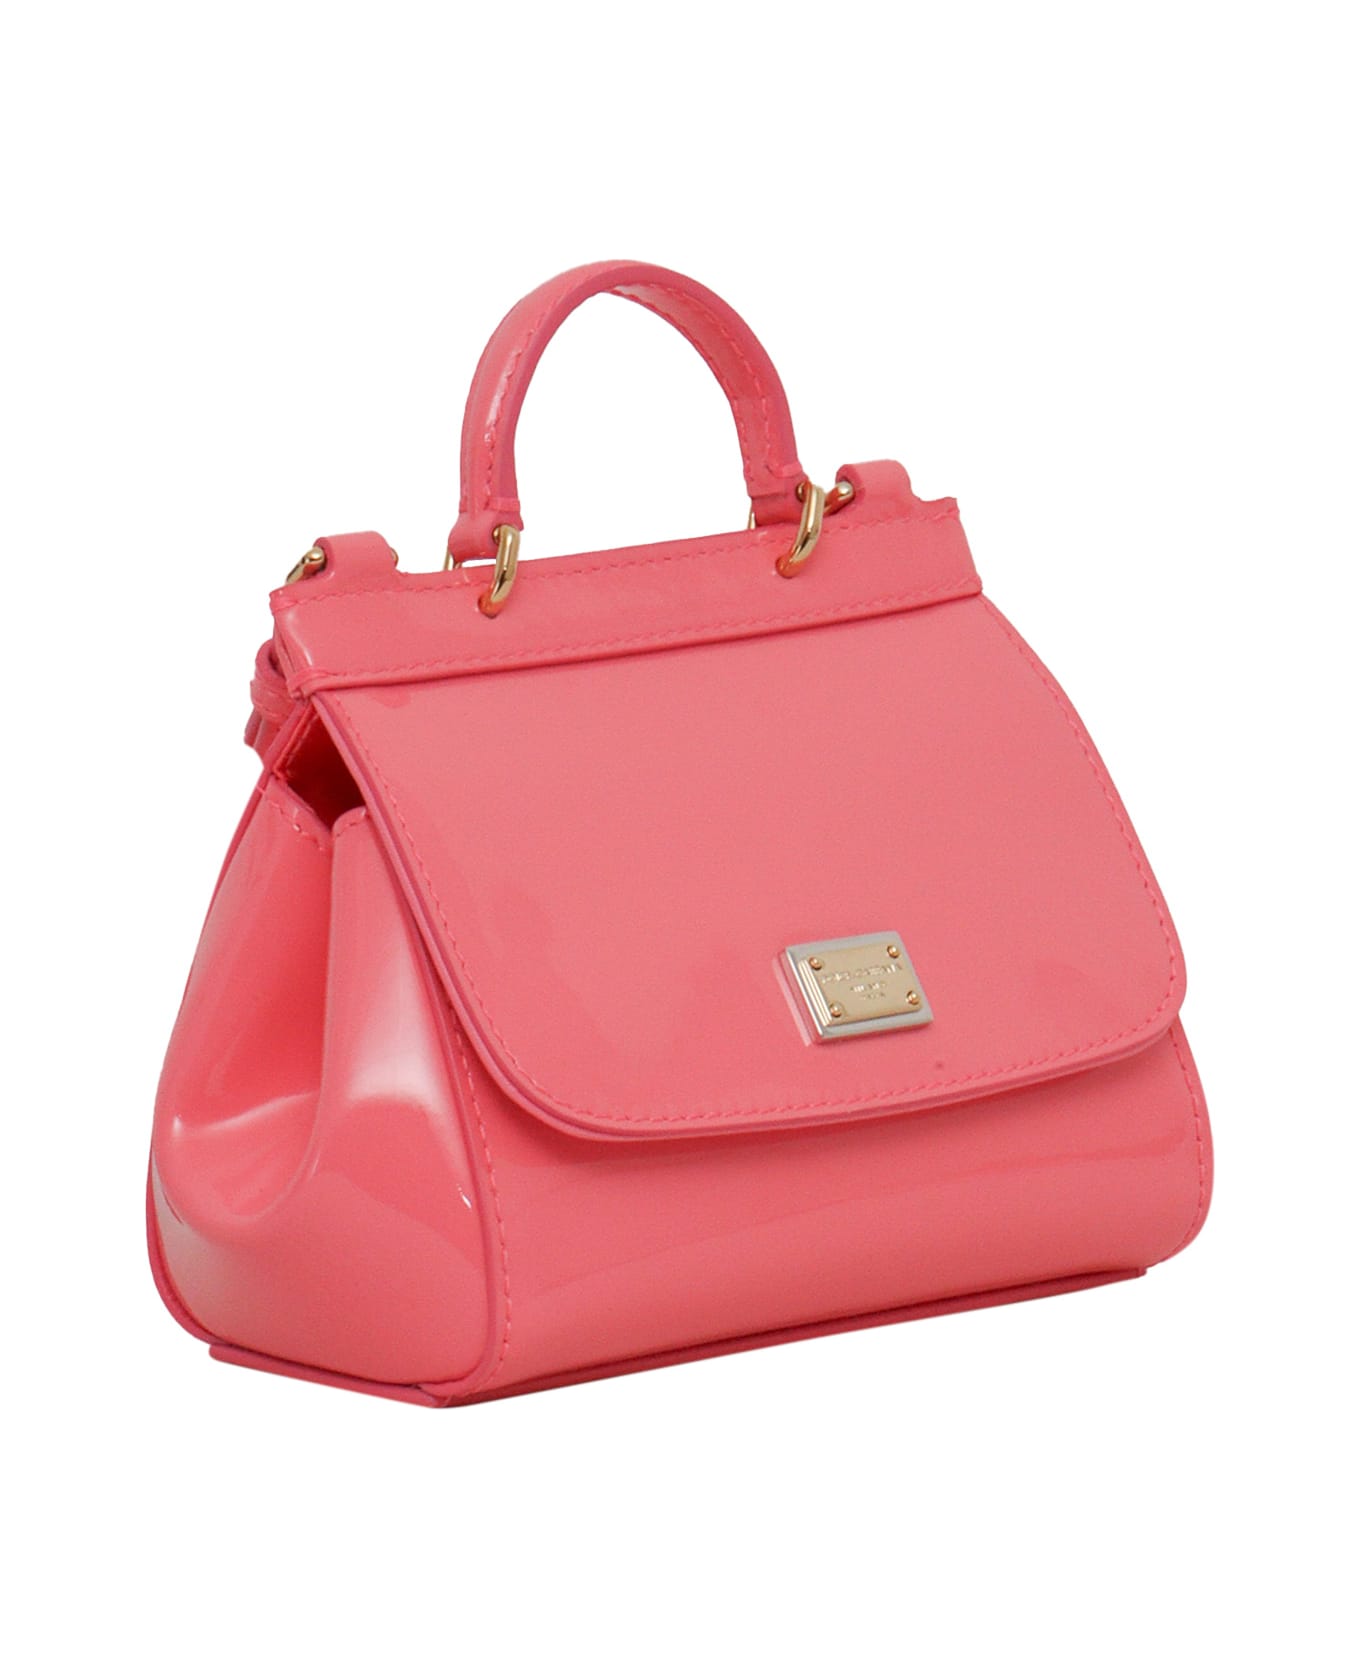 Dolce & Gabbana Pink D&g Leather Bag - FUCHSIA